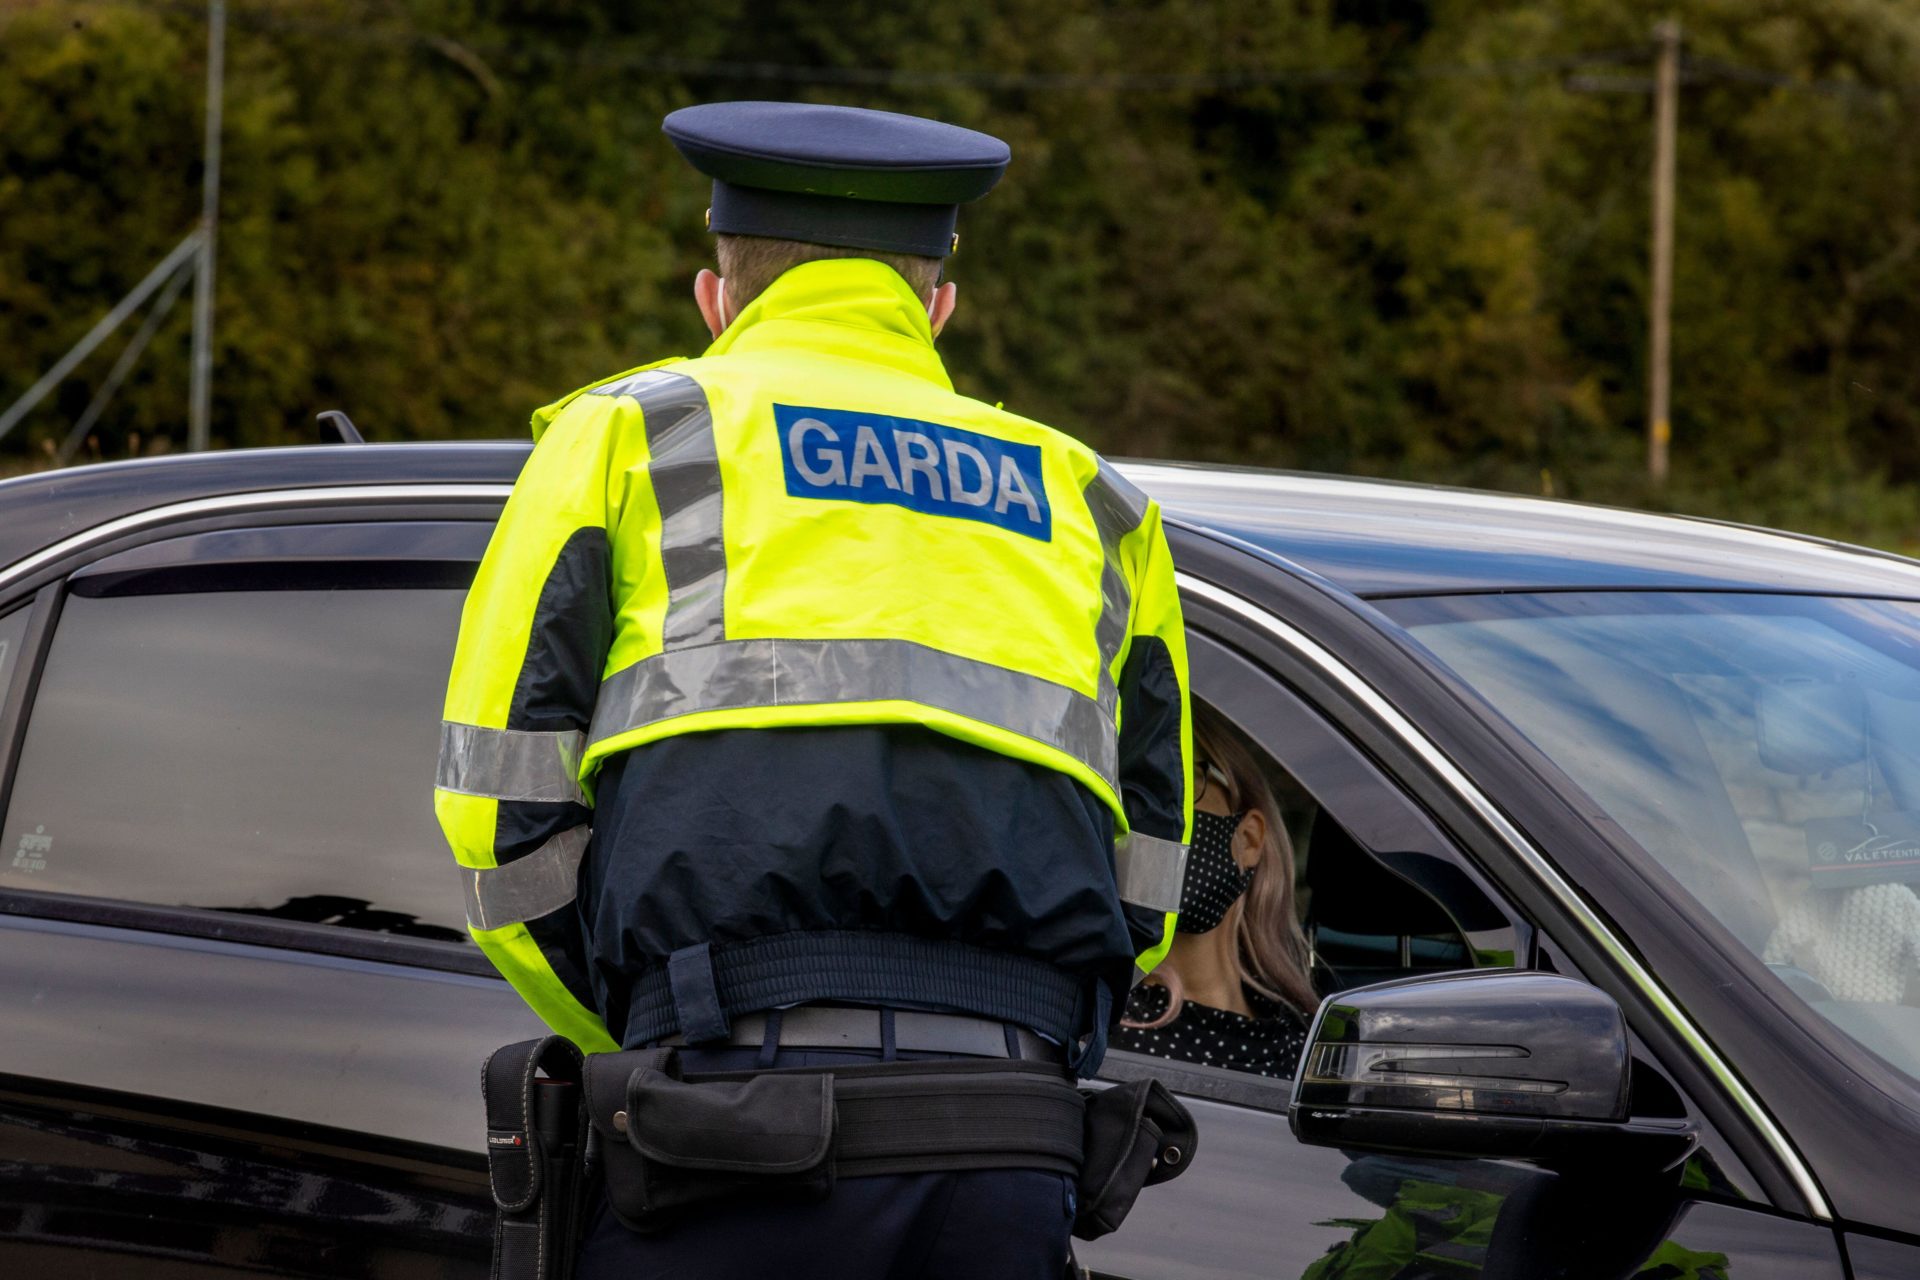 Members of An Garda Síochána performing random vehicle checks in Co Donegal in September 2020.